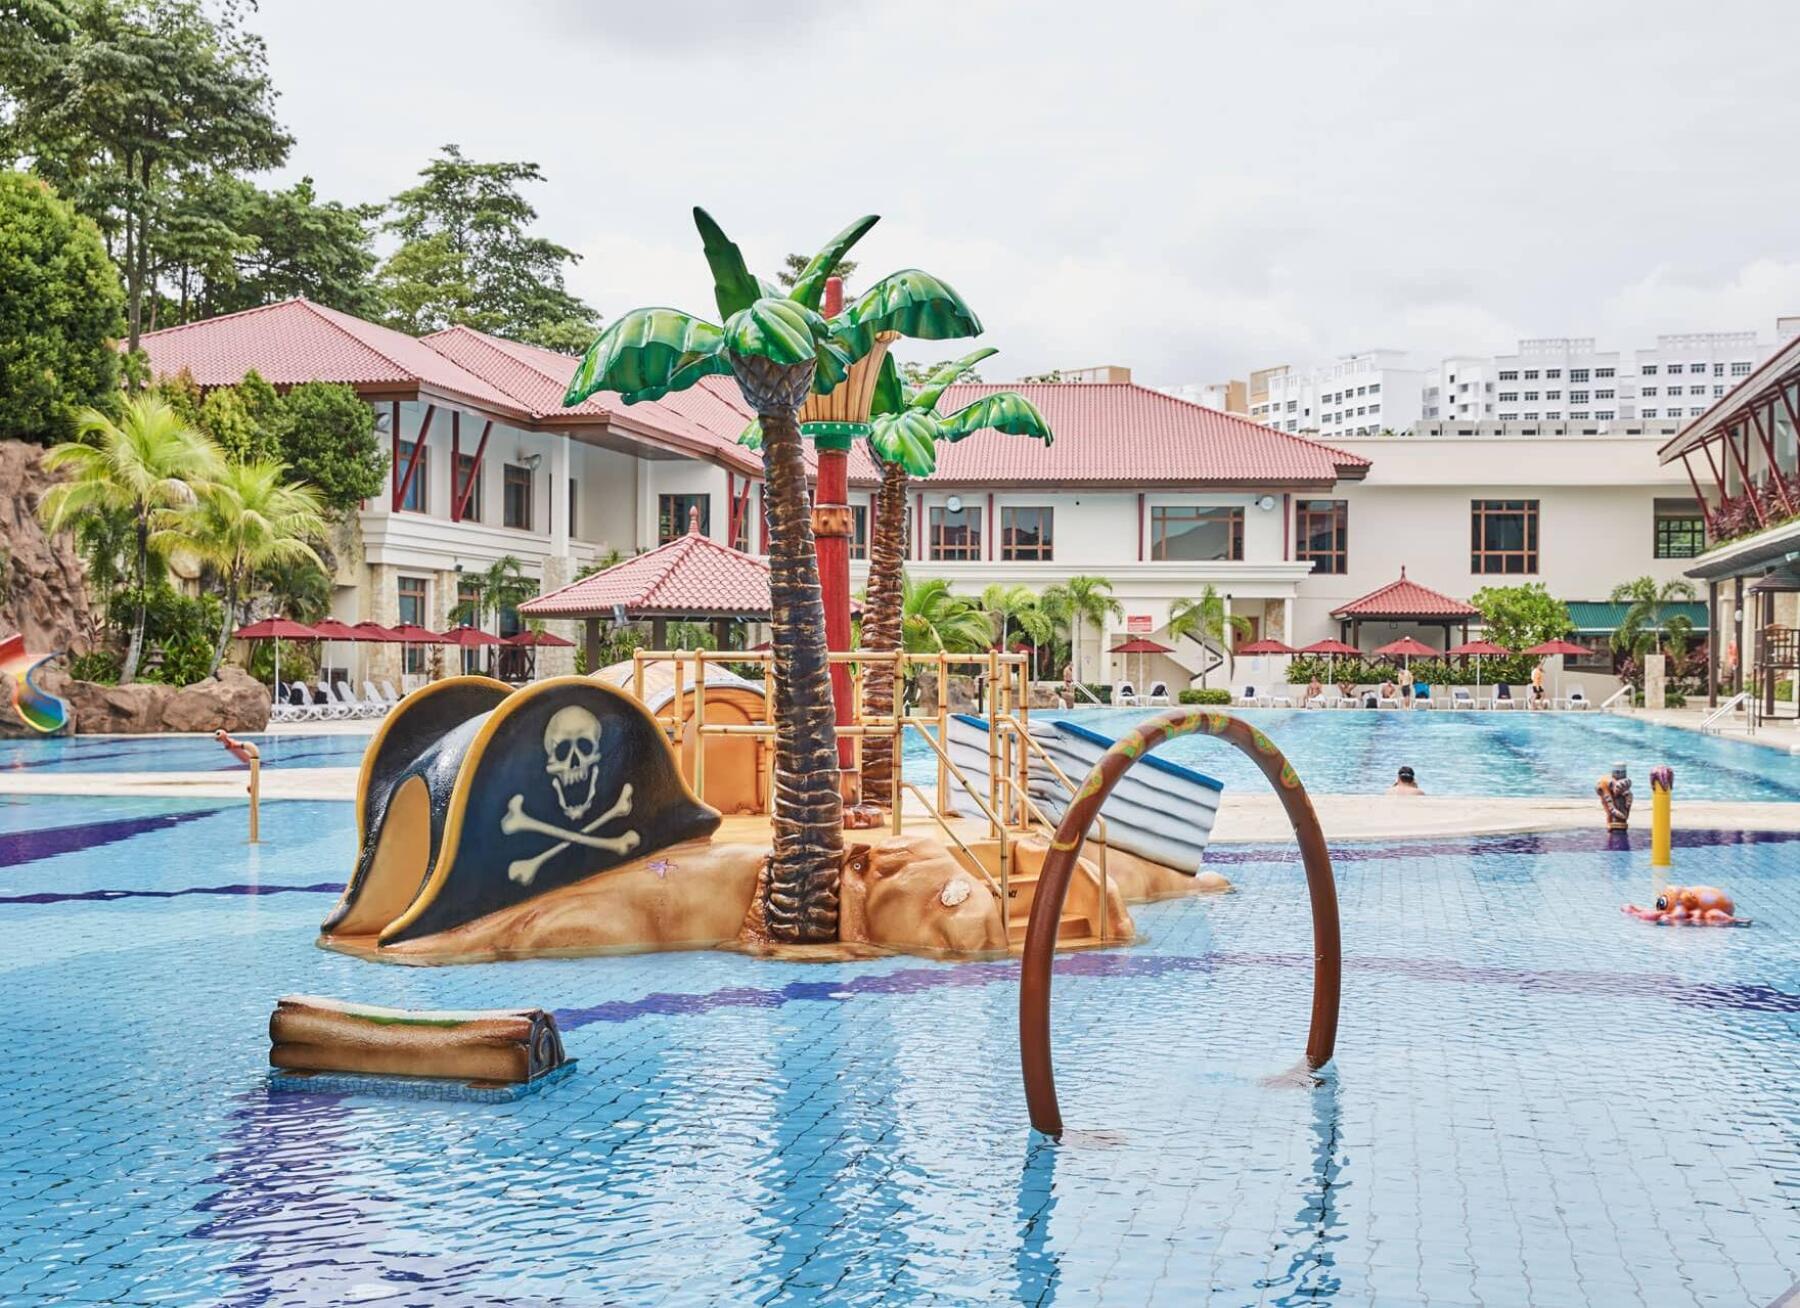 SAFRA Yishun: 12 Kid-Friendly Swimming Pools in Singapore